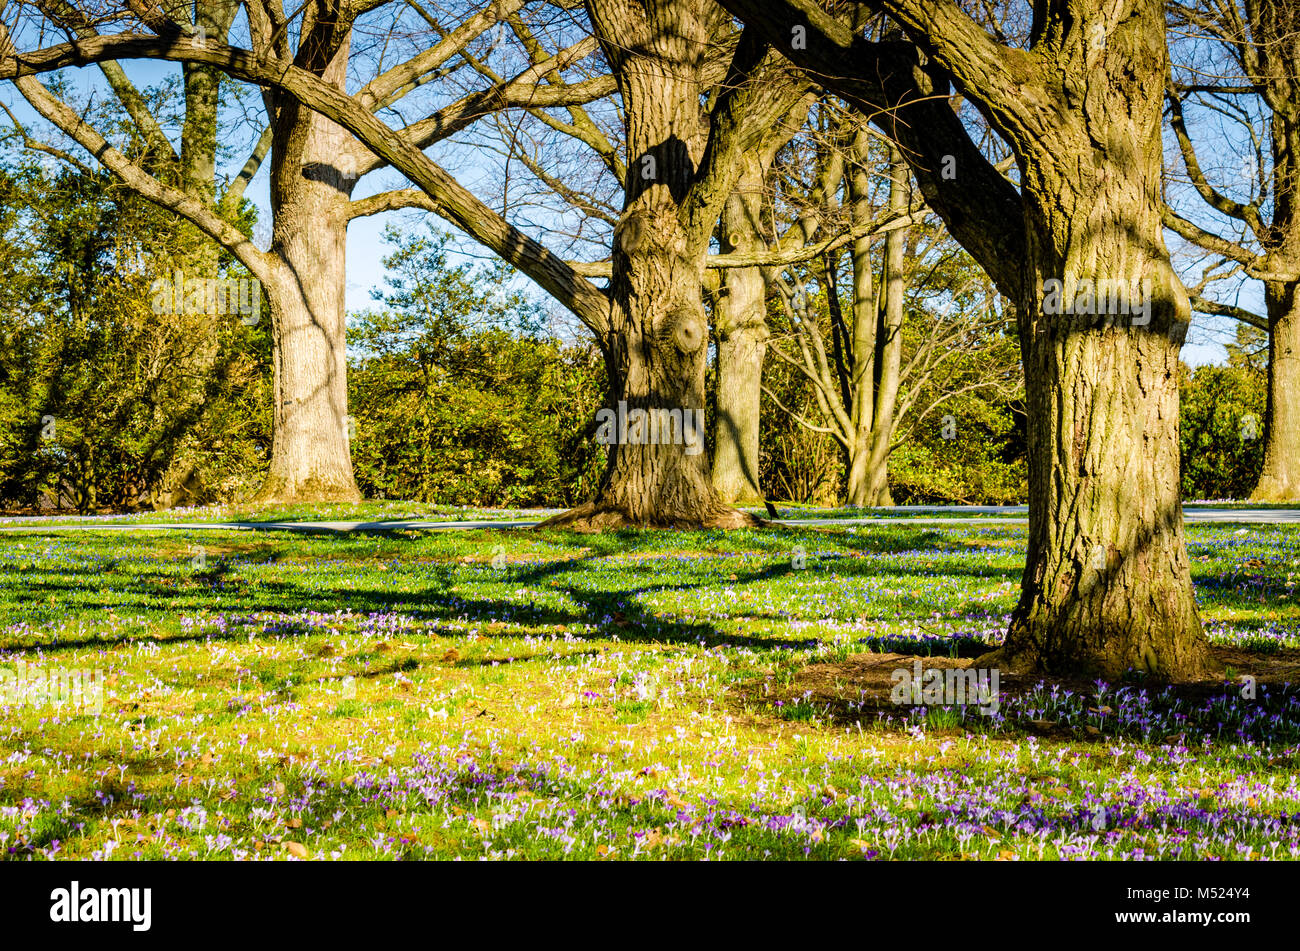 Field of purple crocus (crocus sativus)  flowers, early spring blossoms, under oak trees at Longwood Gardens, an American botanical garden in Kennett  Stock Photo